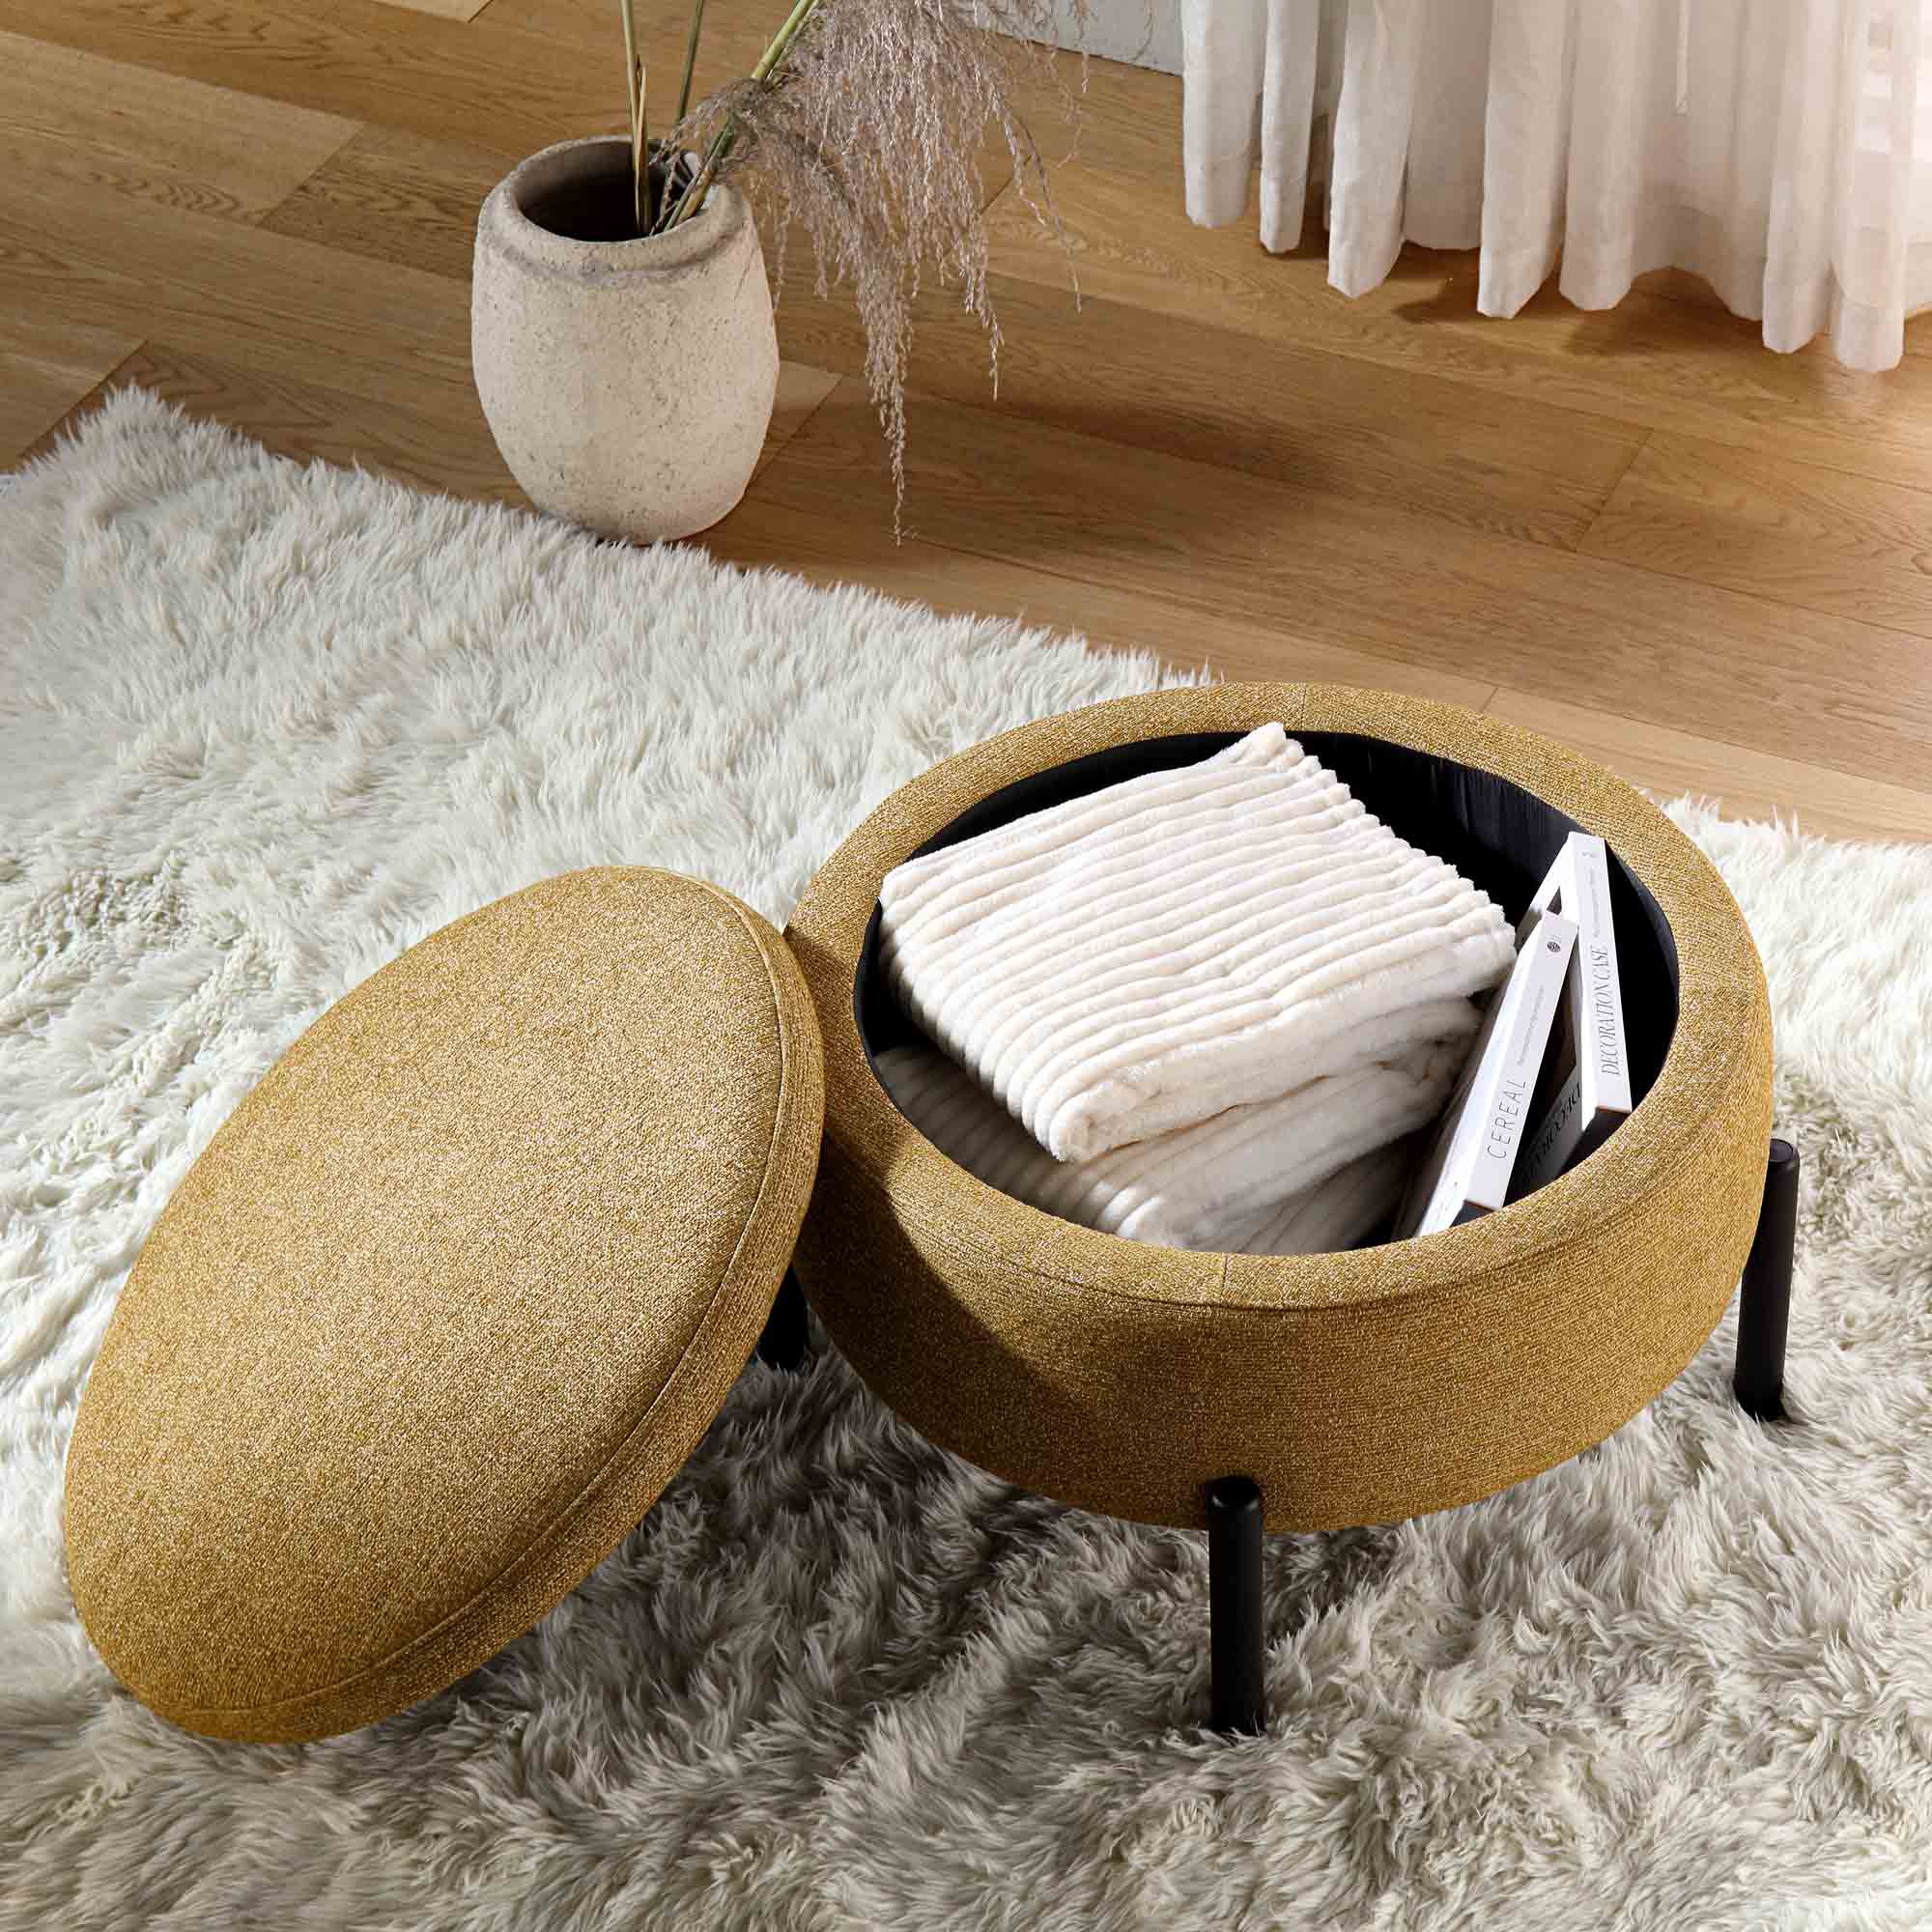 Amboise Round Storage Pouffe, Marigold Textured Fabric